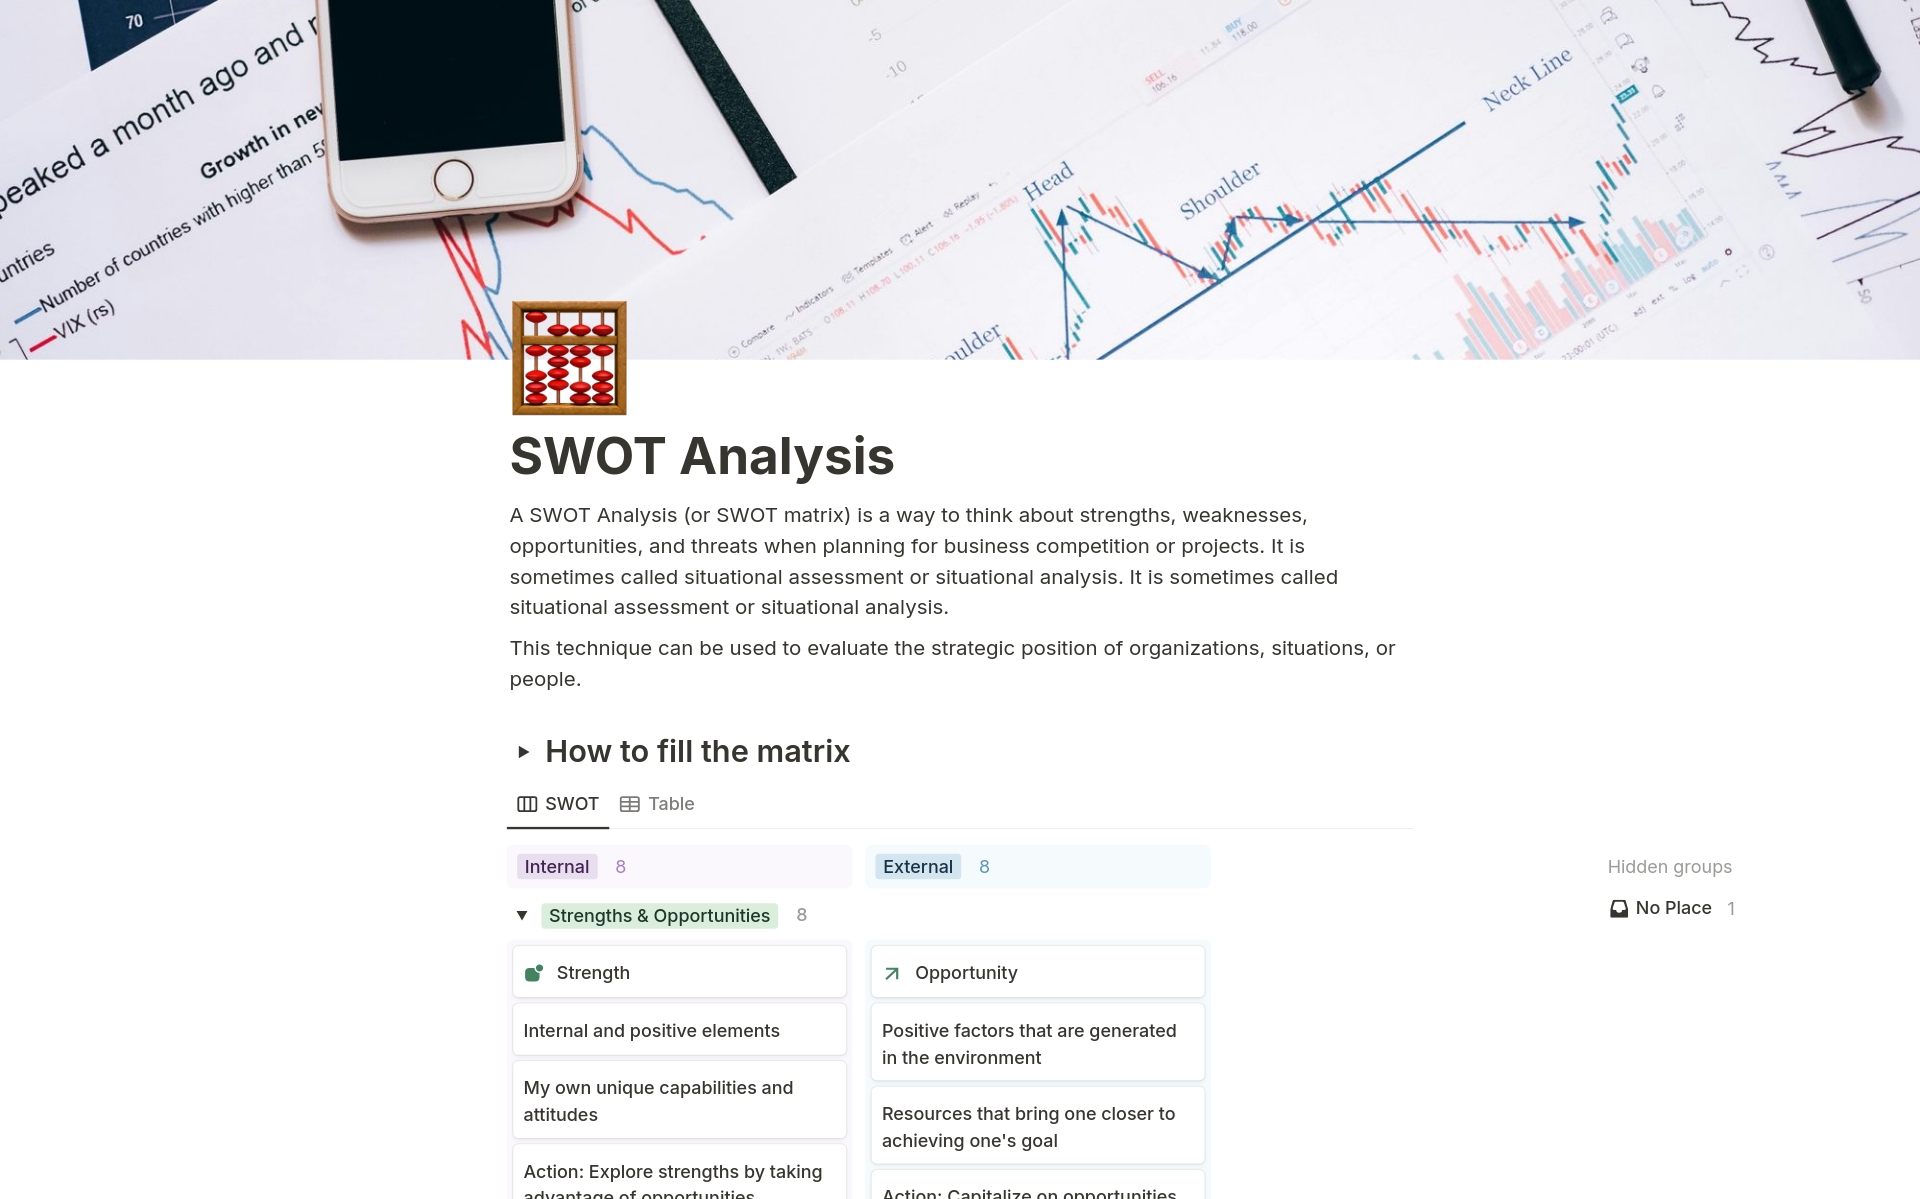 Vista previa de una plantilla para SWOT Analysis